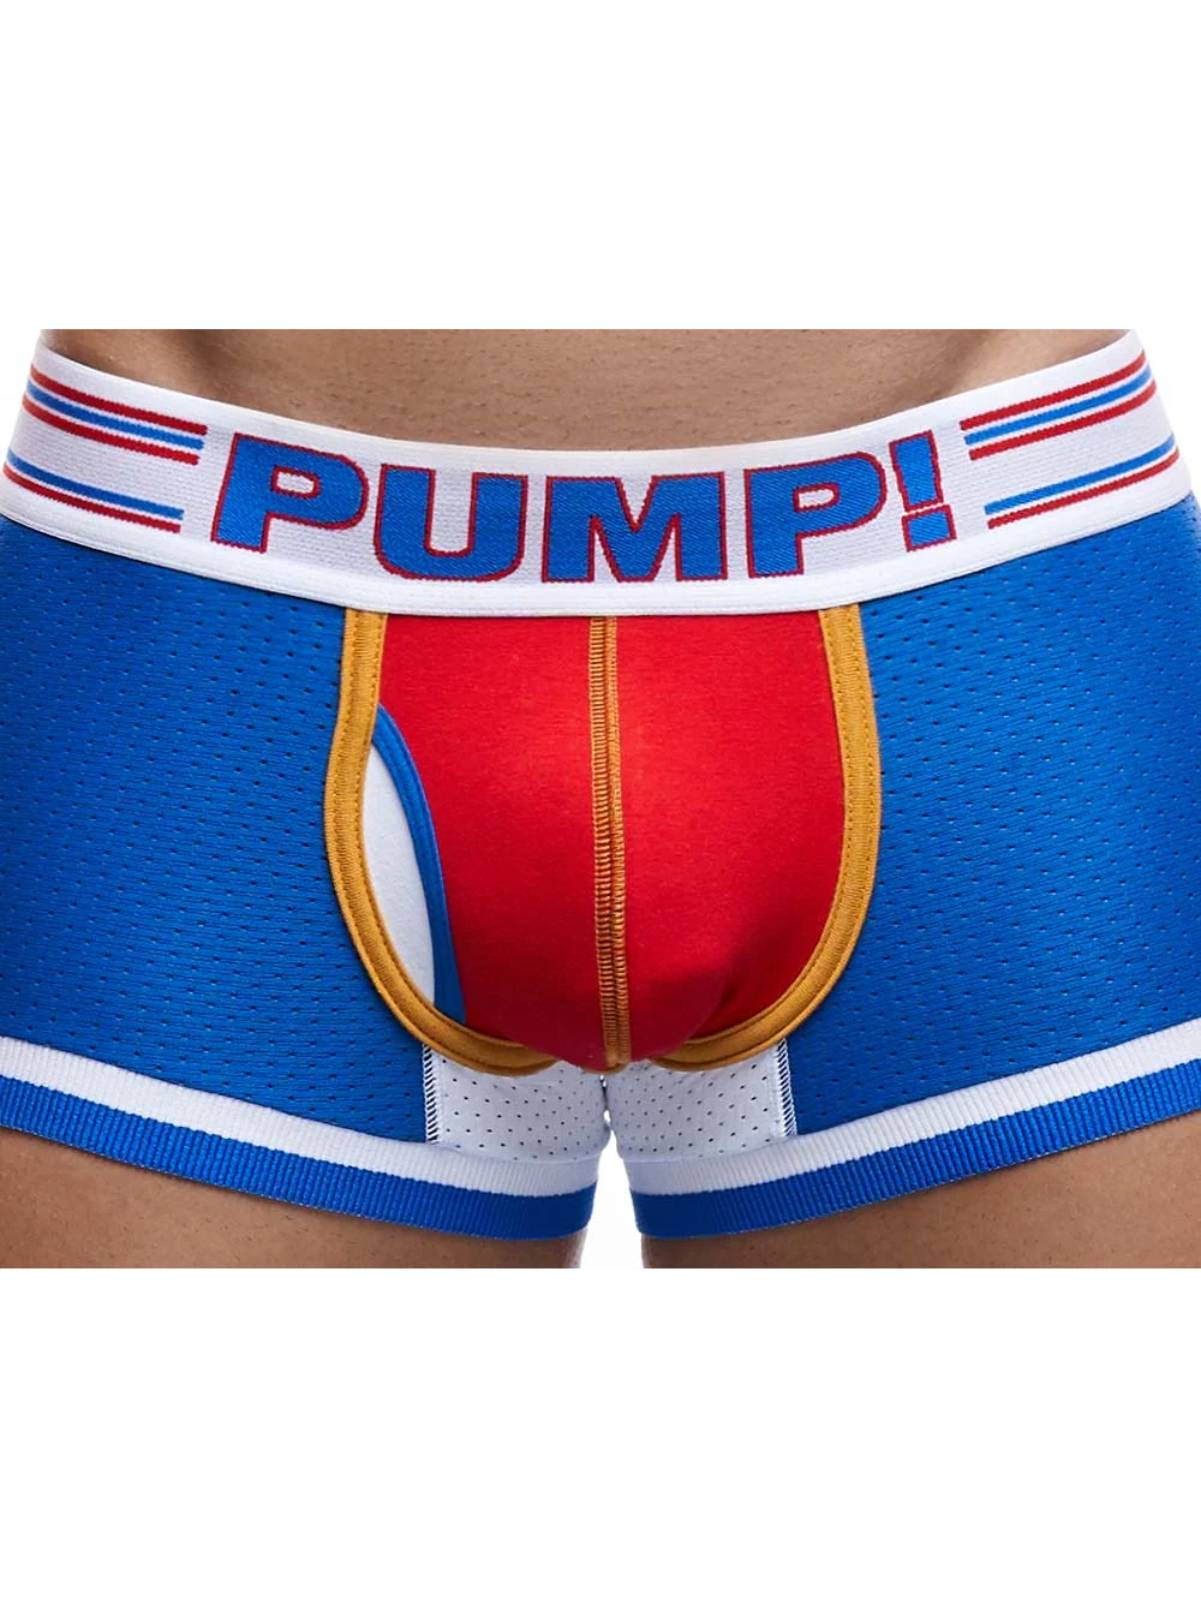 PUMP! Velocity Touchdown Boxer | Blue/White/Red